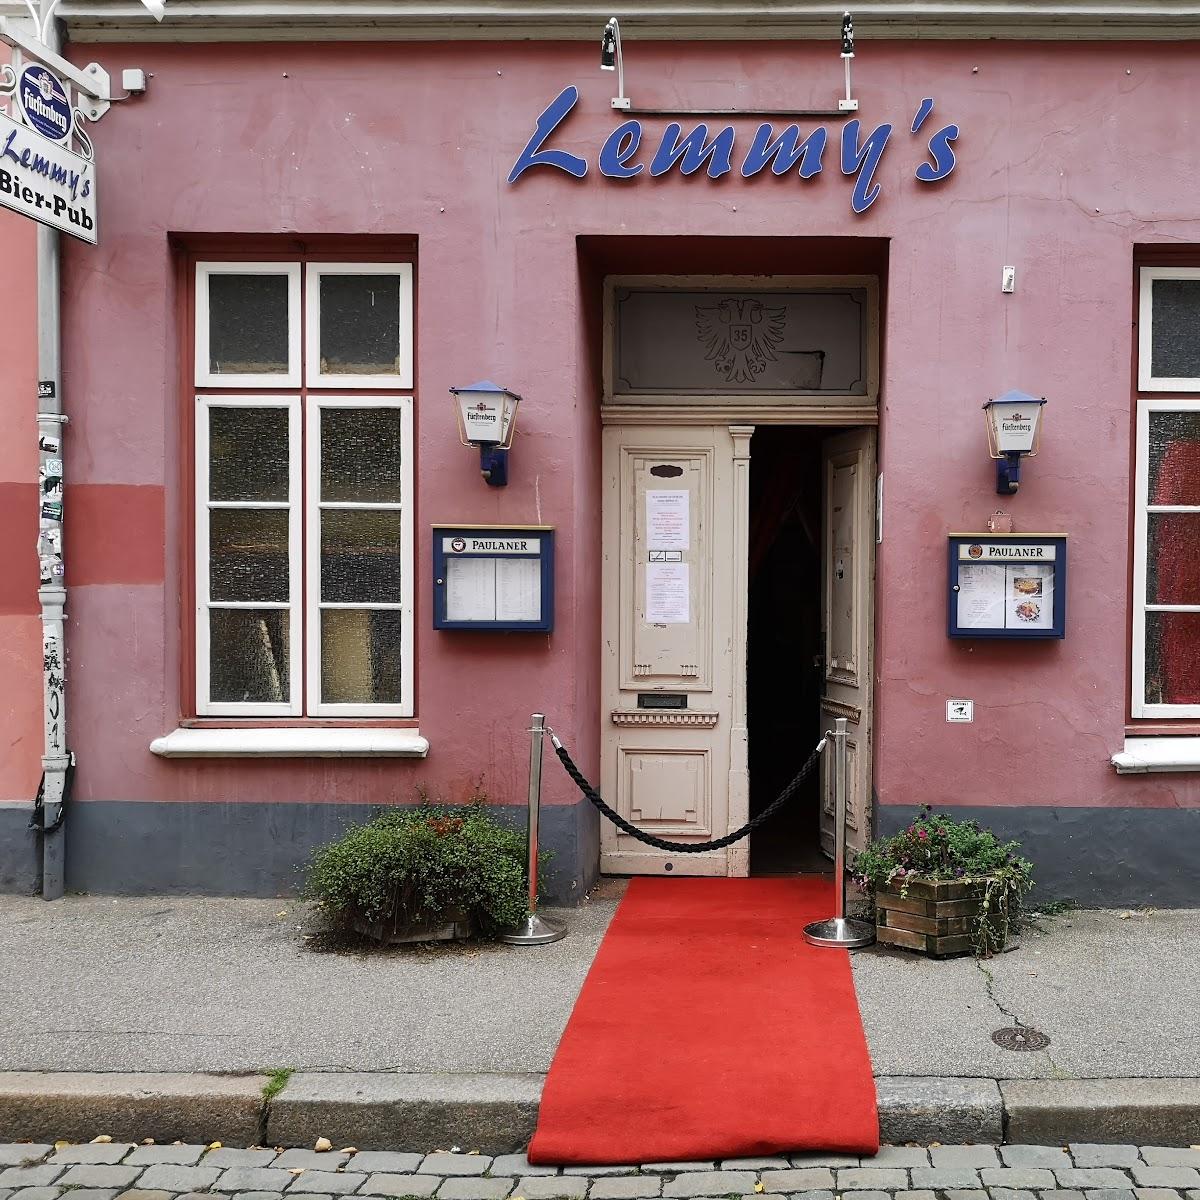 Restaurant "Lemmys" in Lübeck